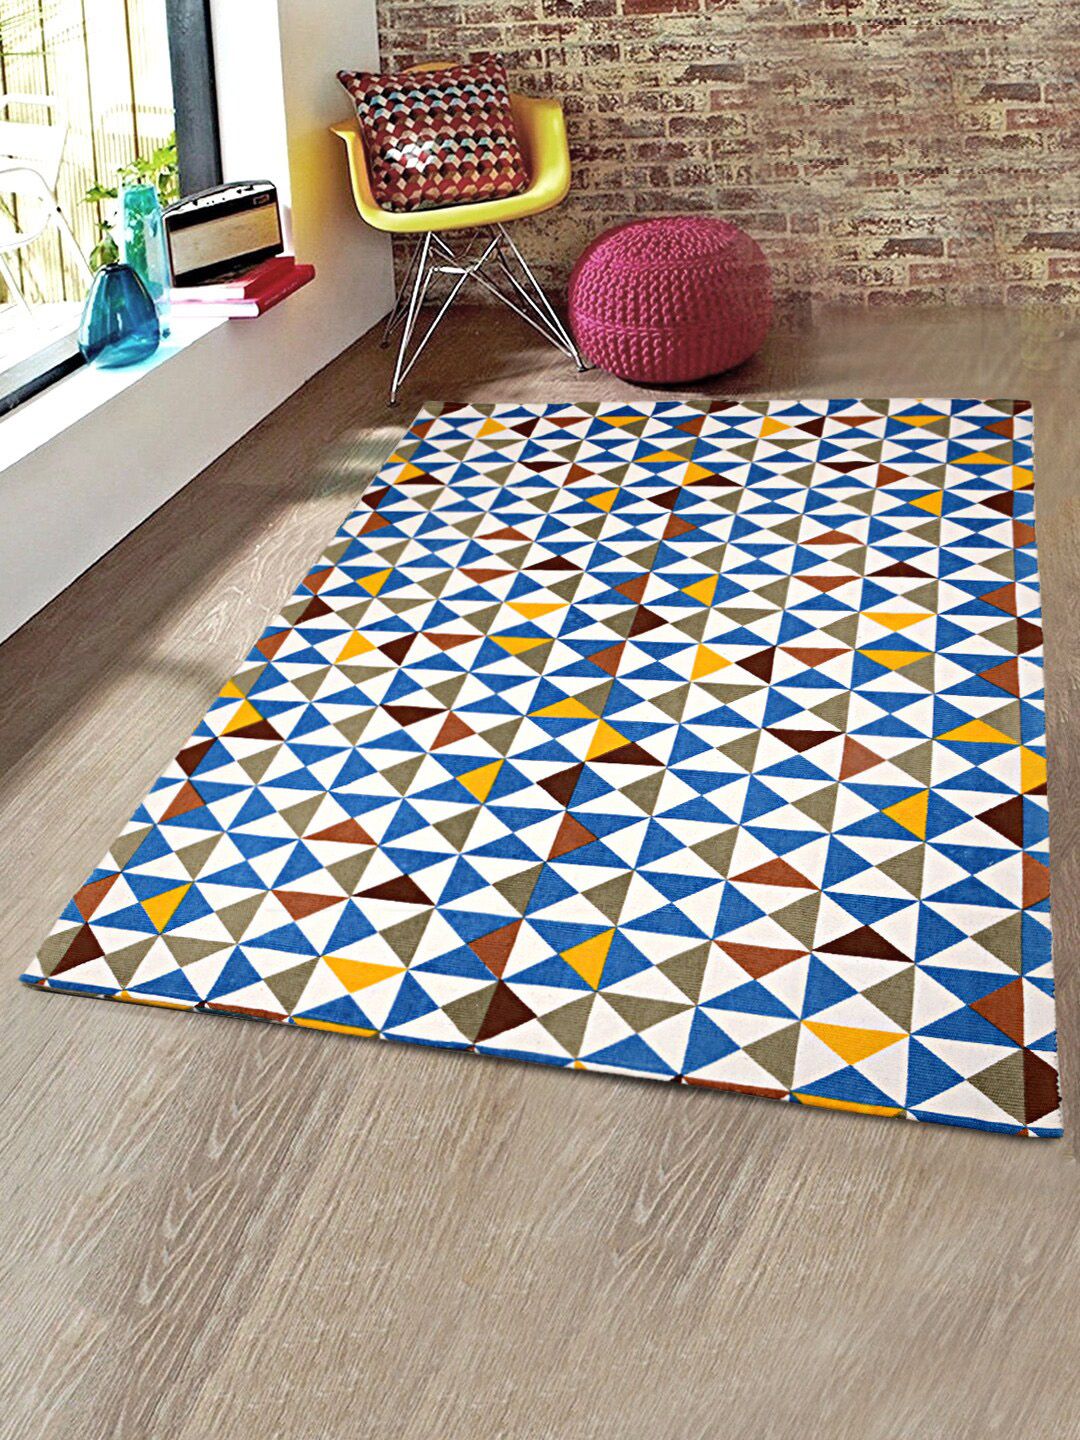 Saral Home Turquoise Blue & White Geometric Printed Anti-Skid Carpet Price in India